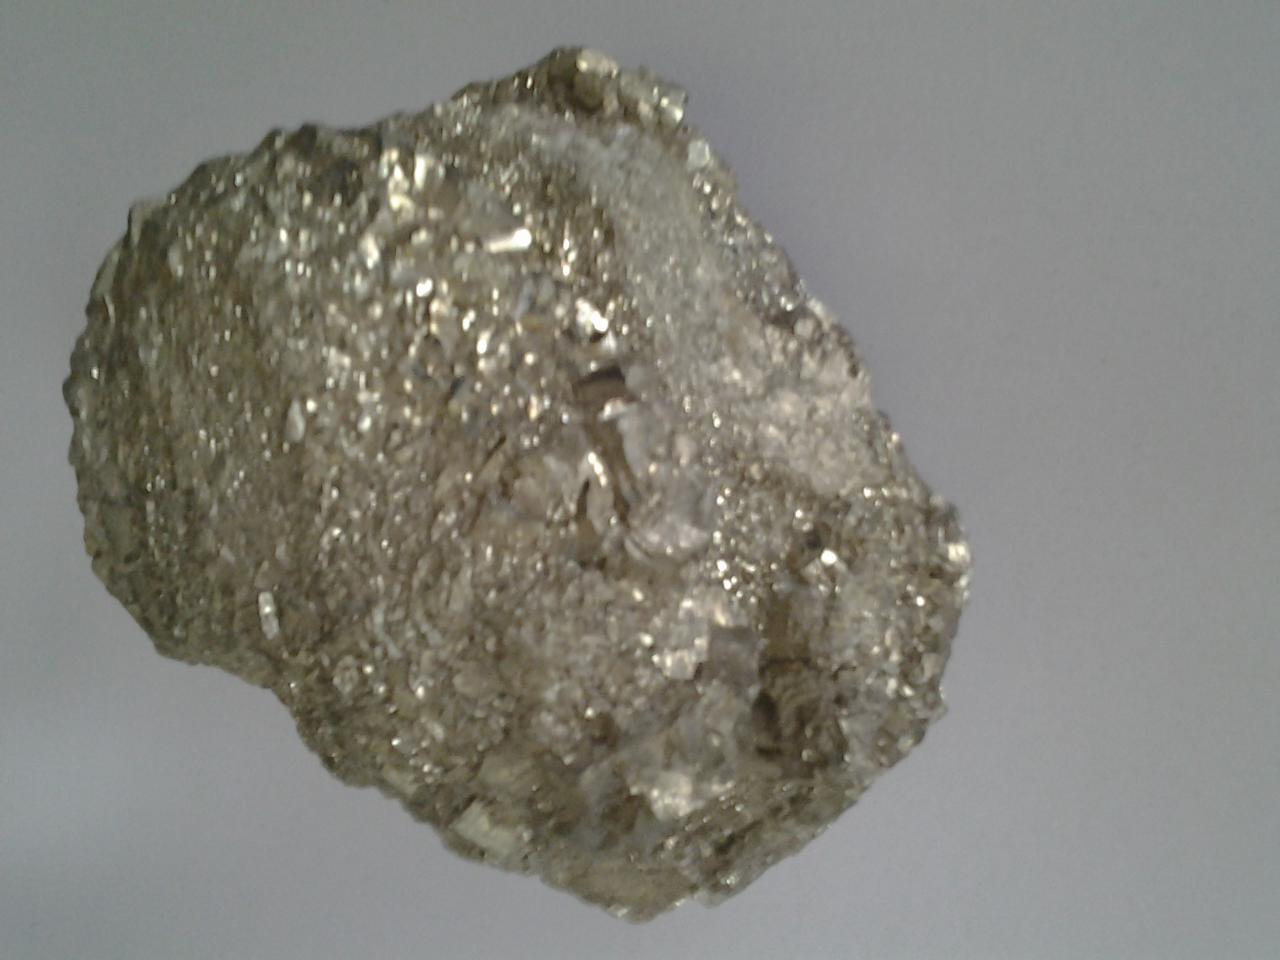 Pyrite, Fes2, Iron Sulfide, Ferrous Disulfide, Pyrrhotite, Ferro Sulphur, Piryte, Ferrous Sulfide, Iron Disulfide, Fes